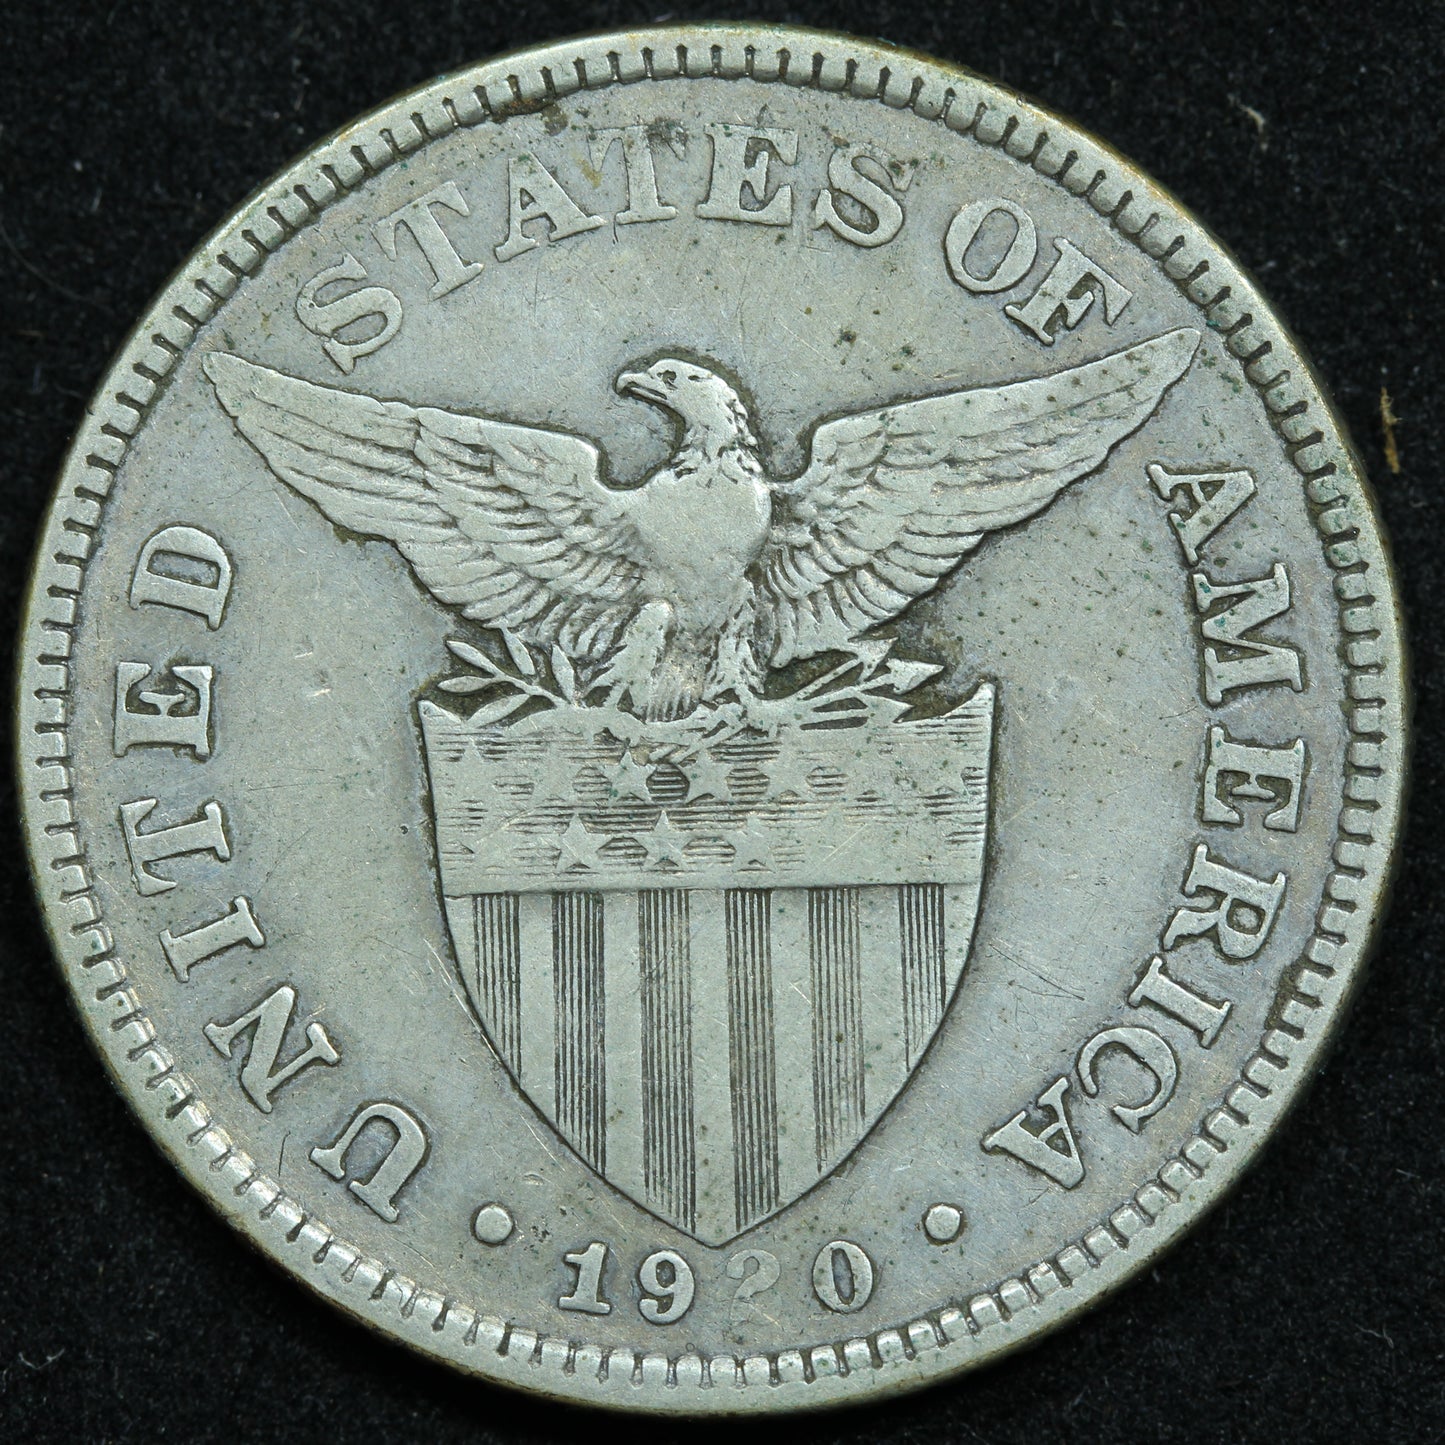 1920 50 Centavos Philippines Silver Coin - KM# 171